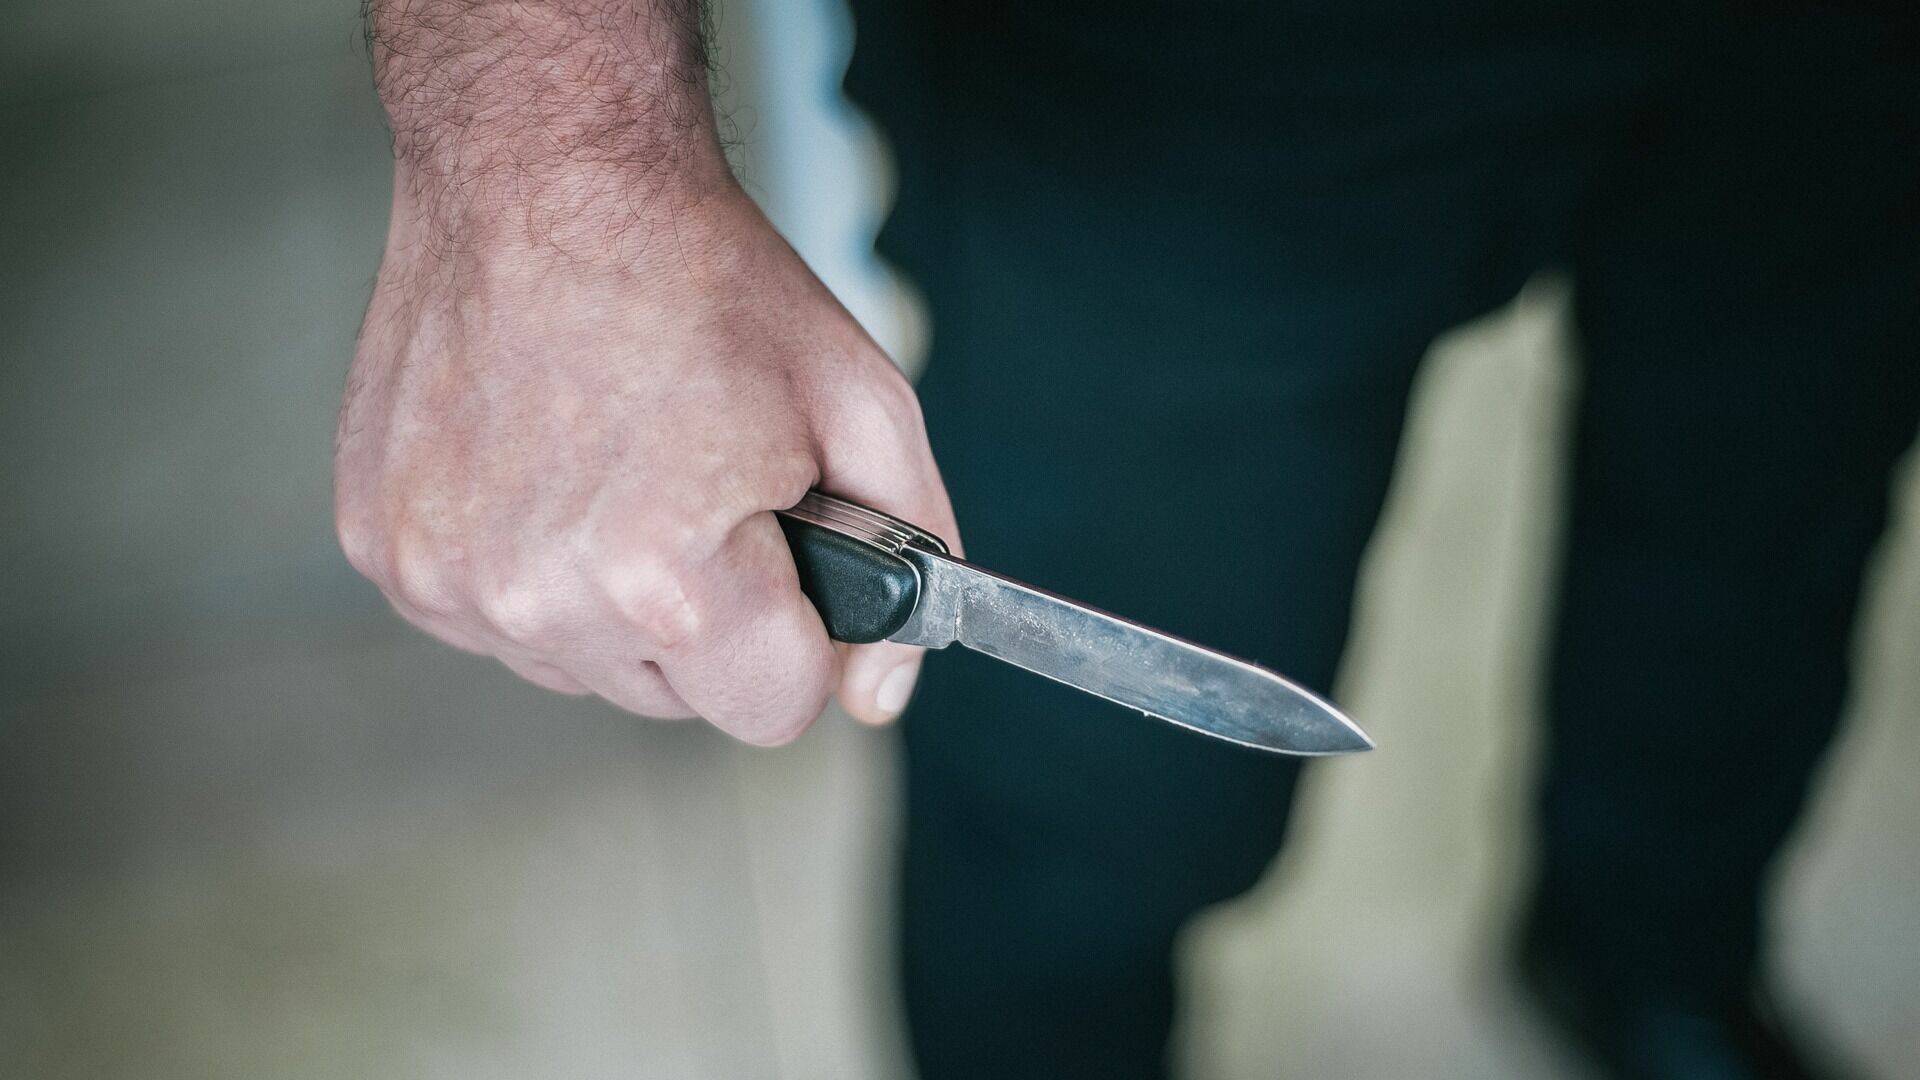 Мужчина с ножом напал на продавщицу магазина в Сузуне Новосибирской области